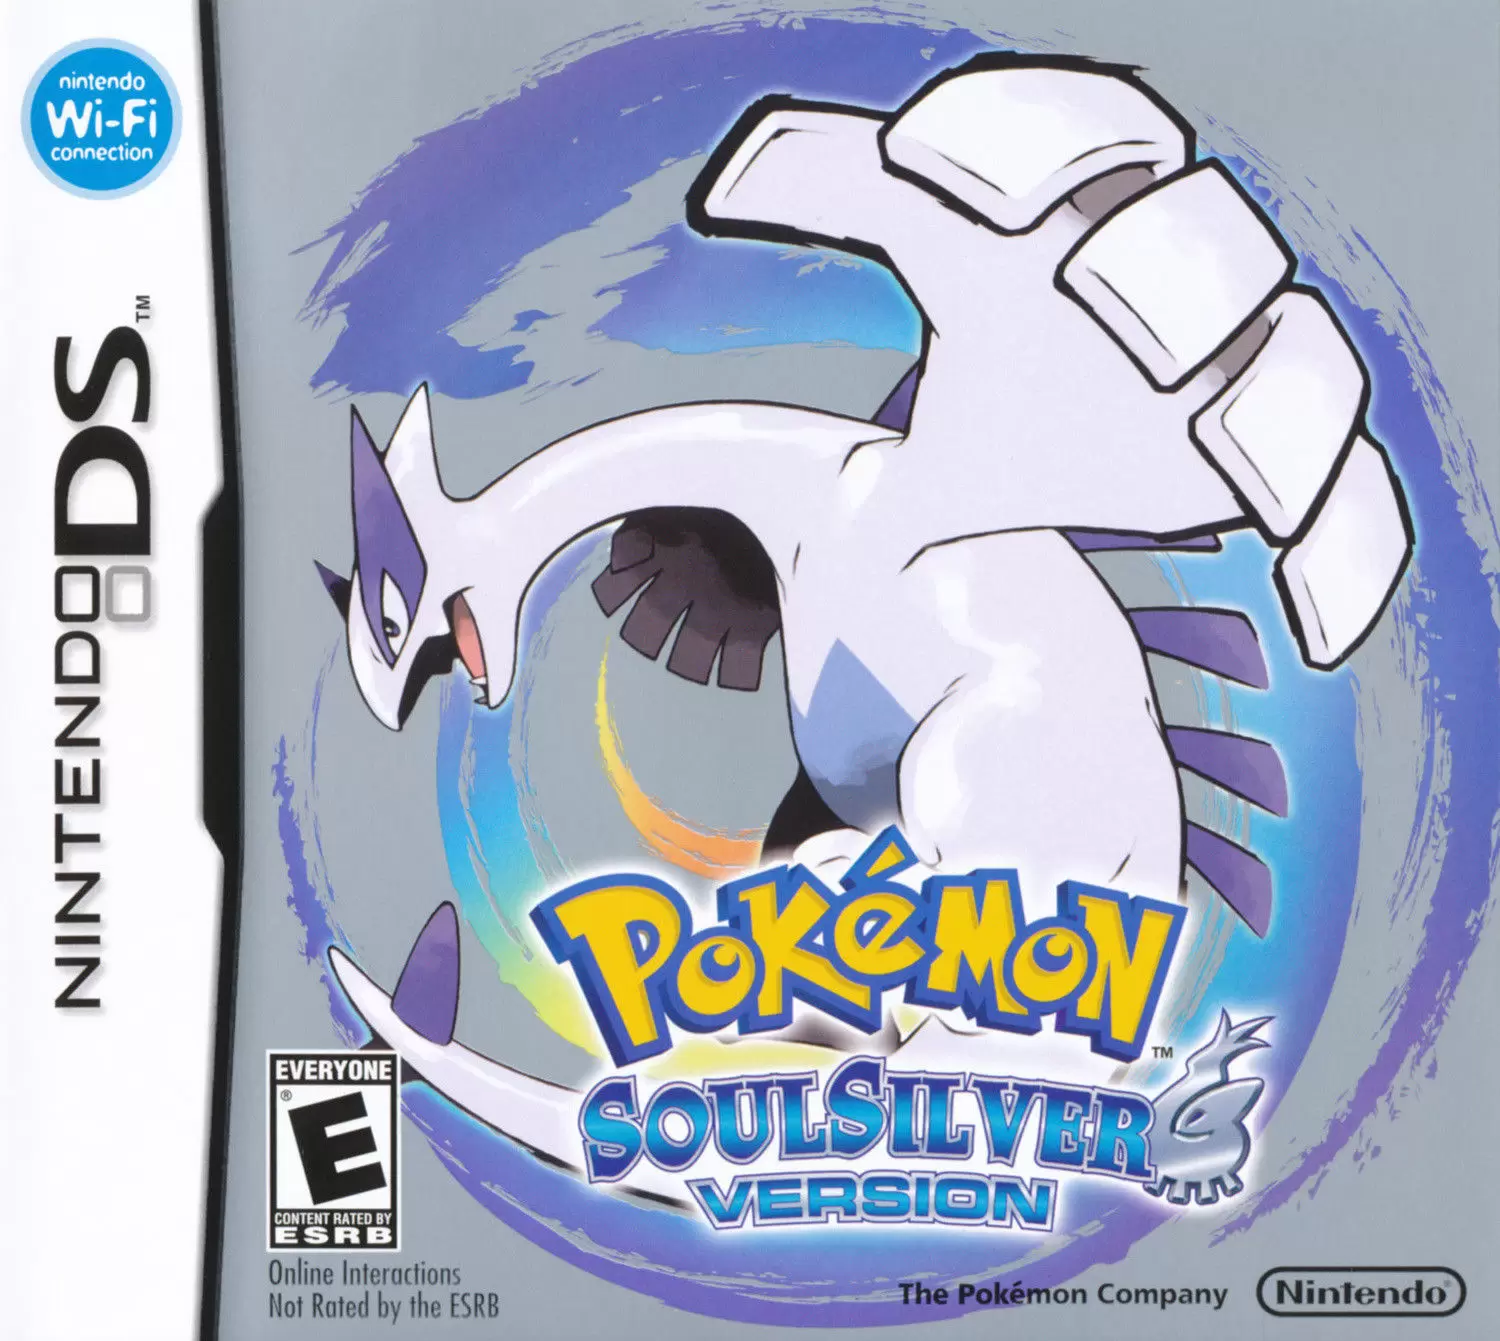 Pokemon HeartGold Version - Limited Edition - Nintendo DS